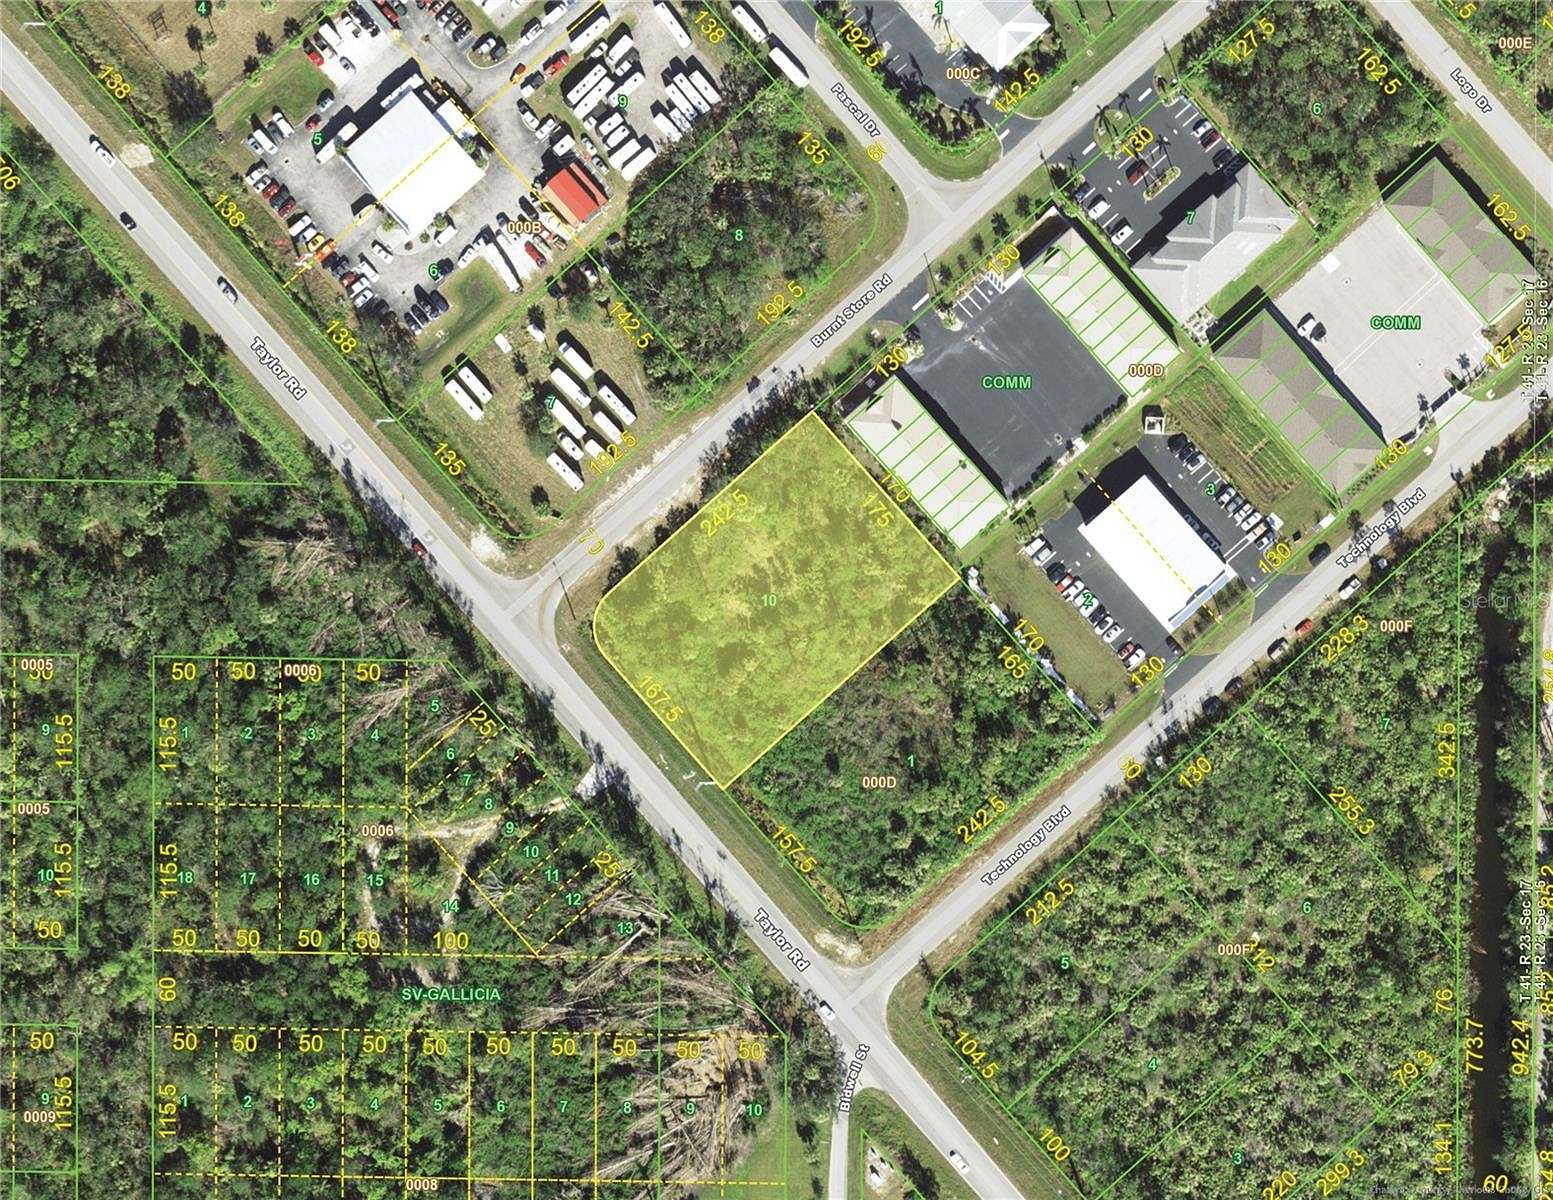 1 Acre of Land for Sale in Punta Gorda, Florida